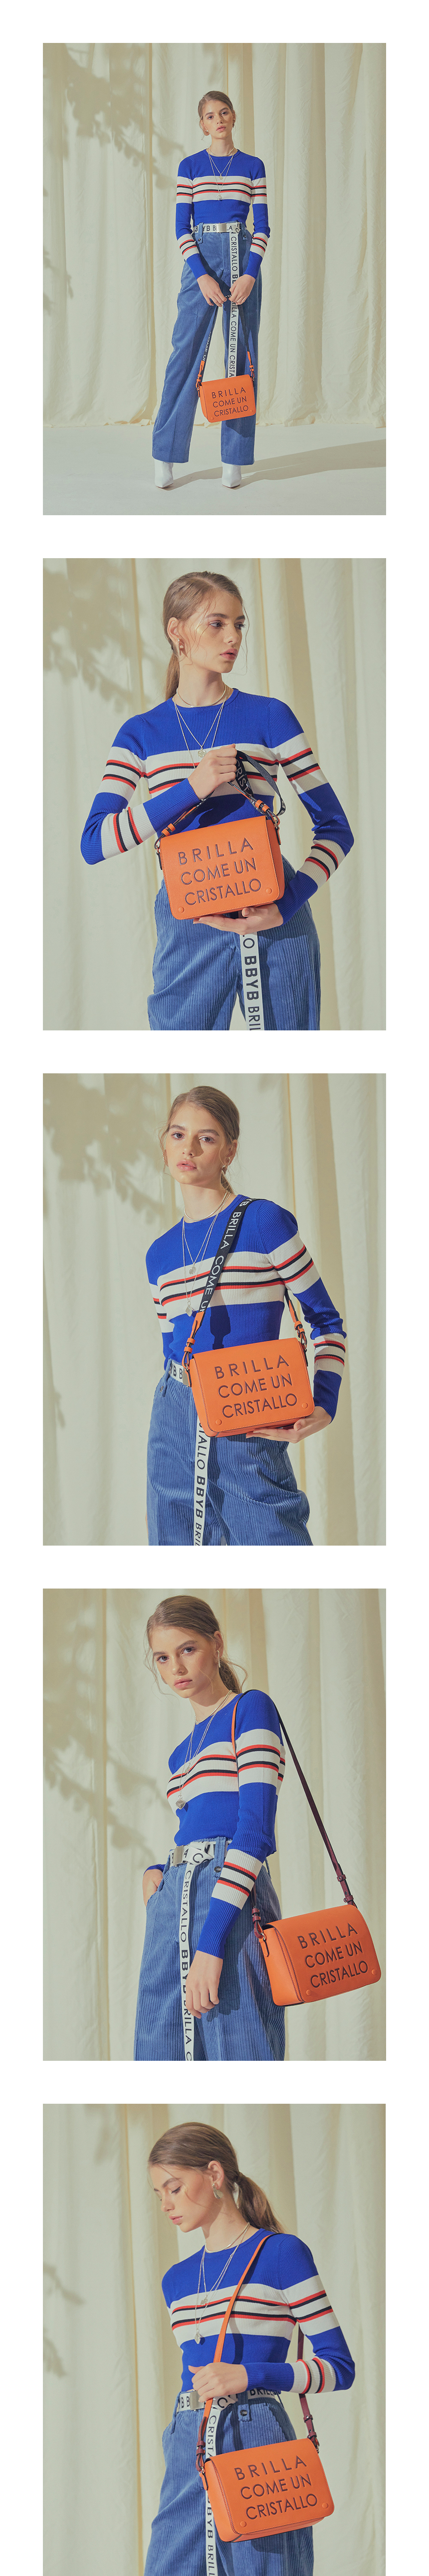 BBYB 우주소녀 은서 착용 MARCE Shoulder Bag Fiesta Orange)